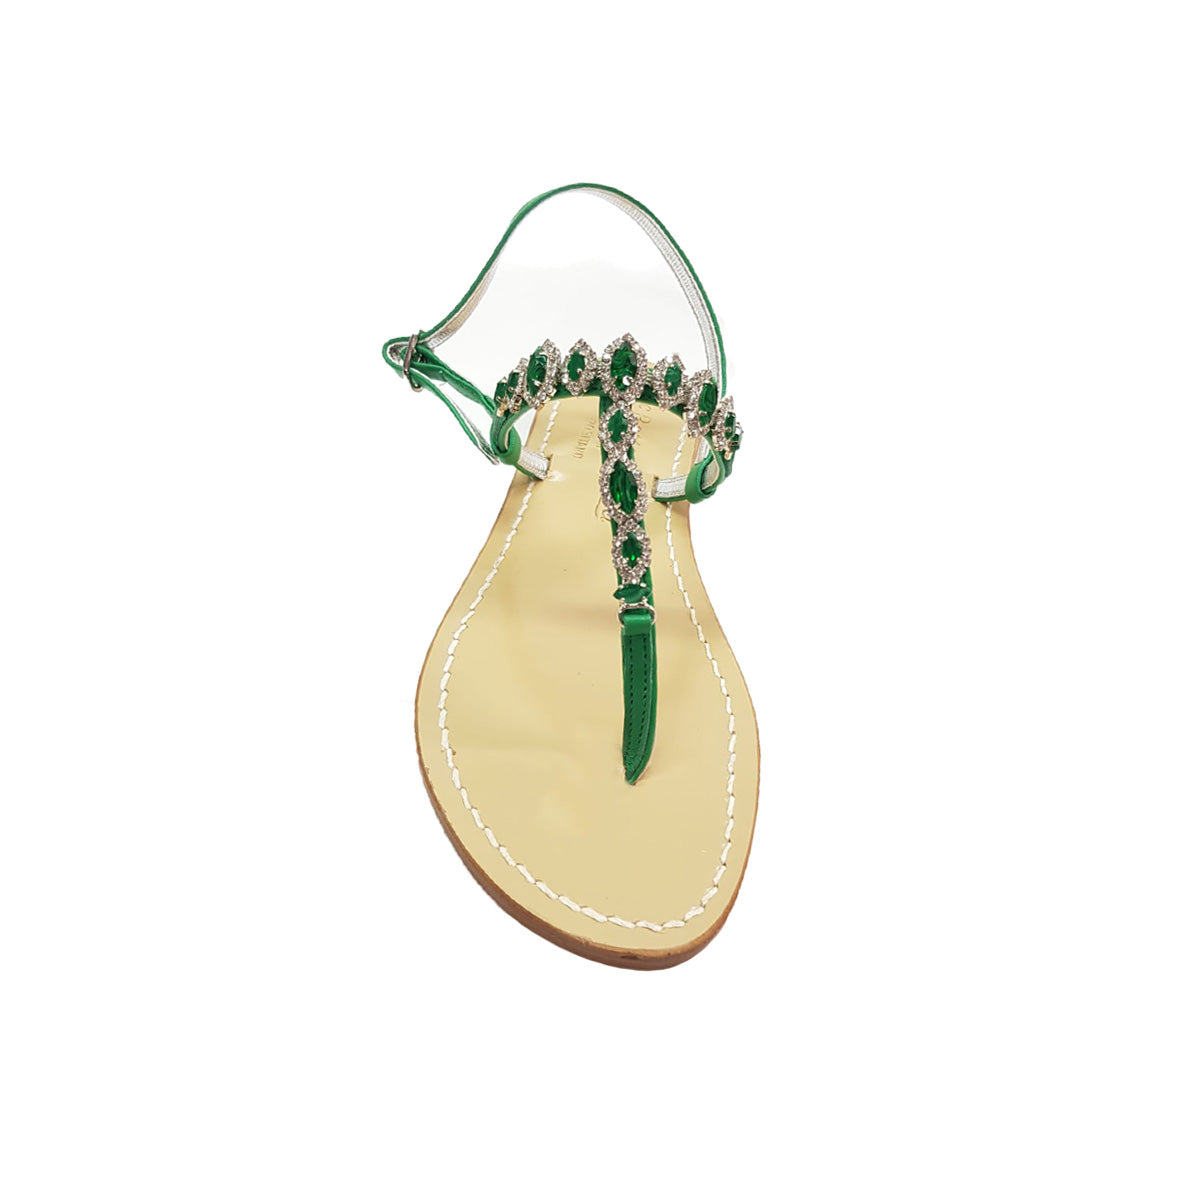 Positano sandal, with stones, green